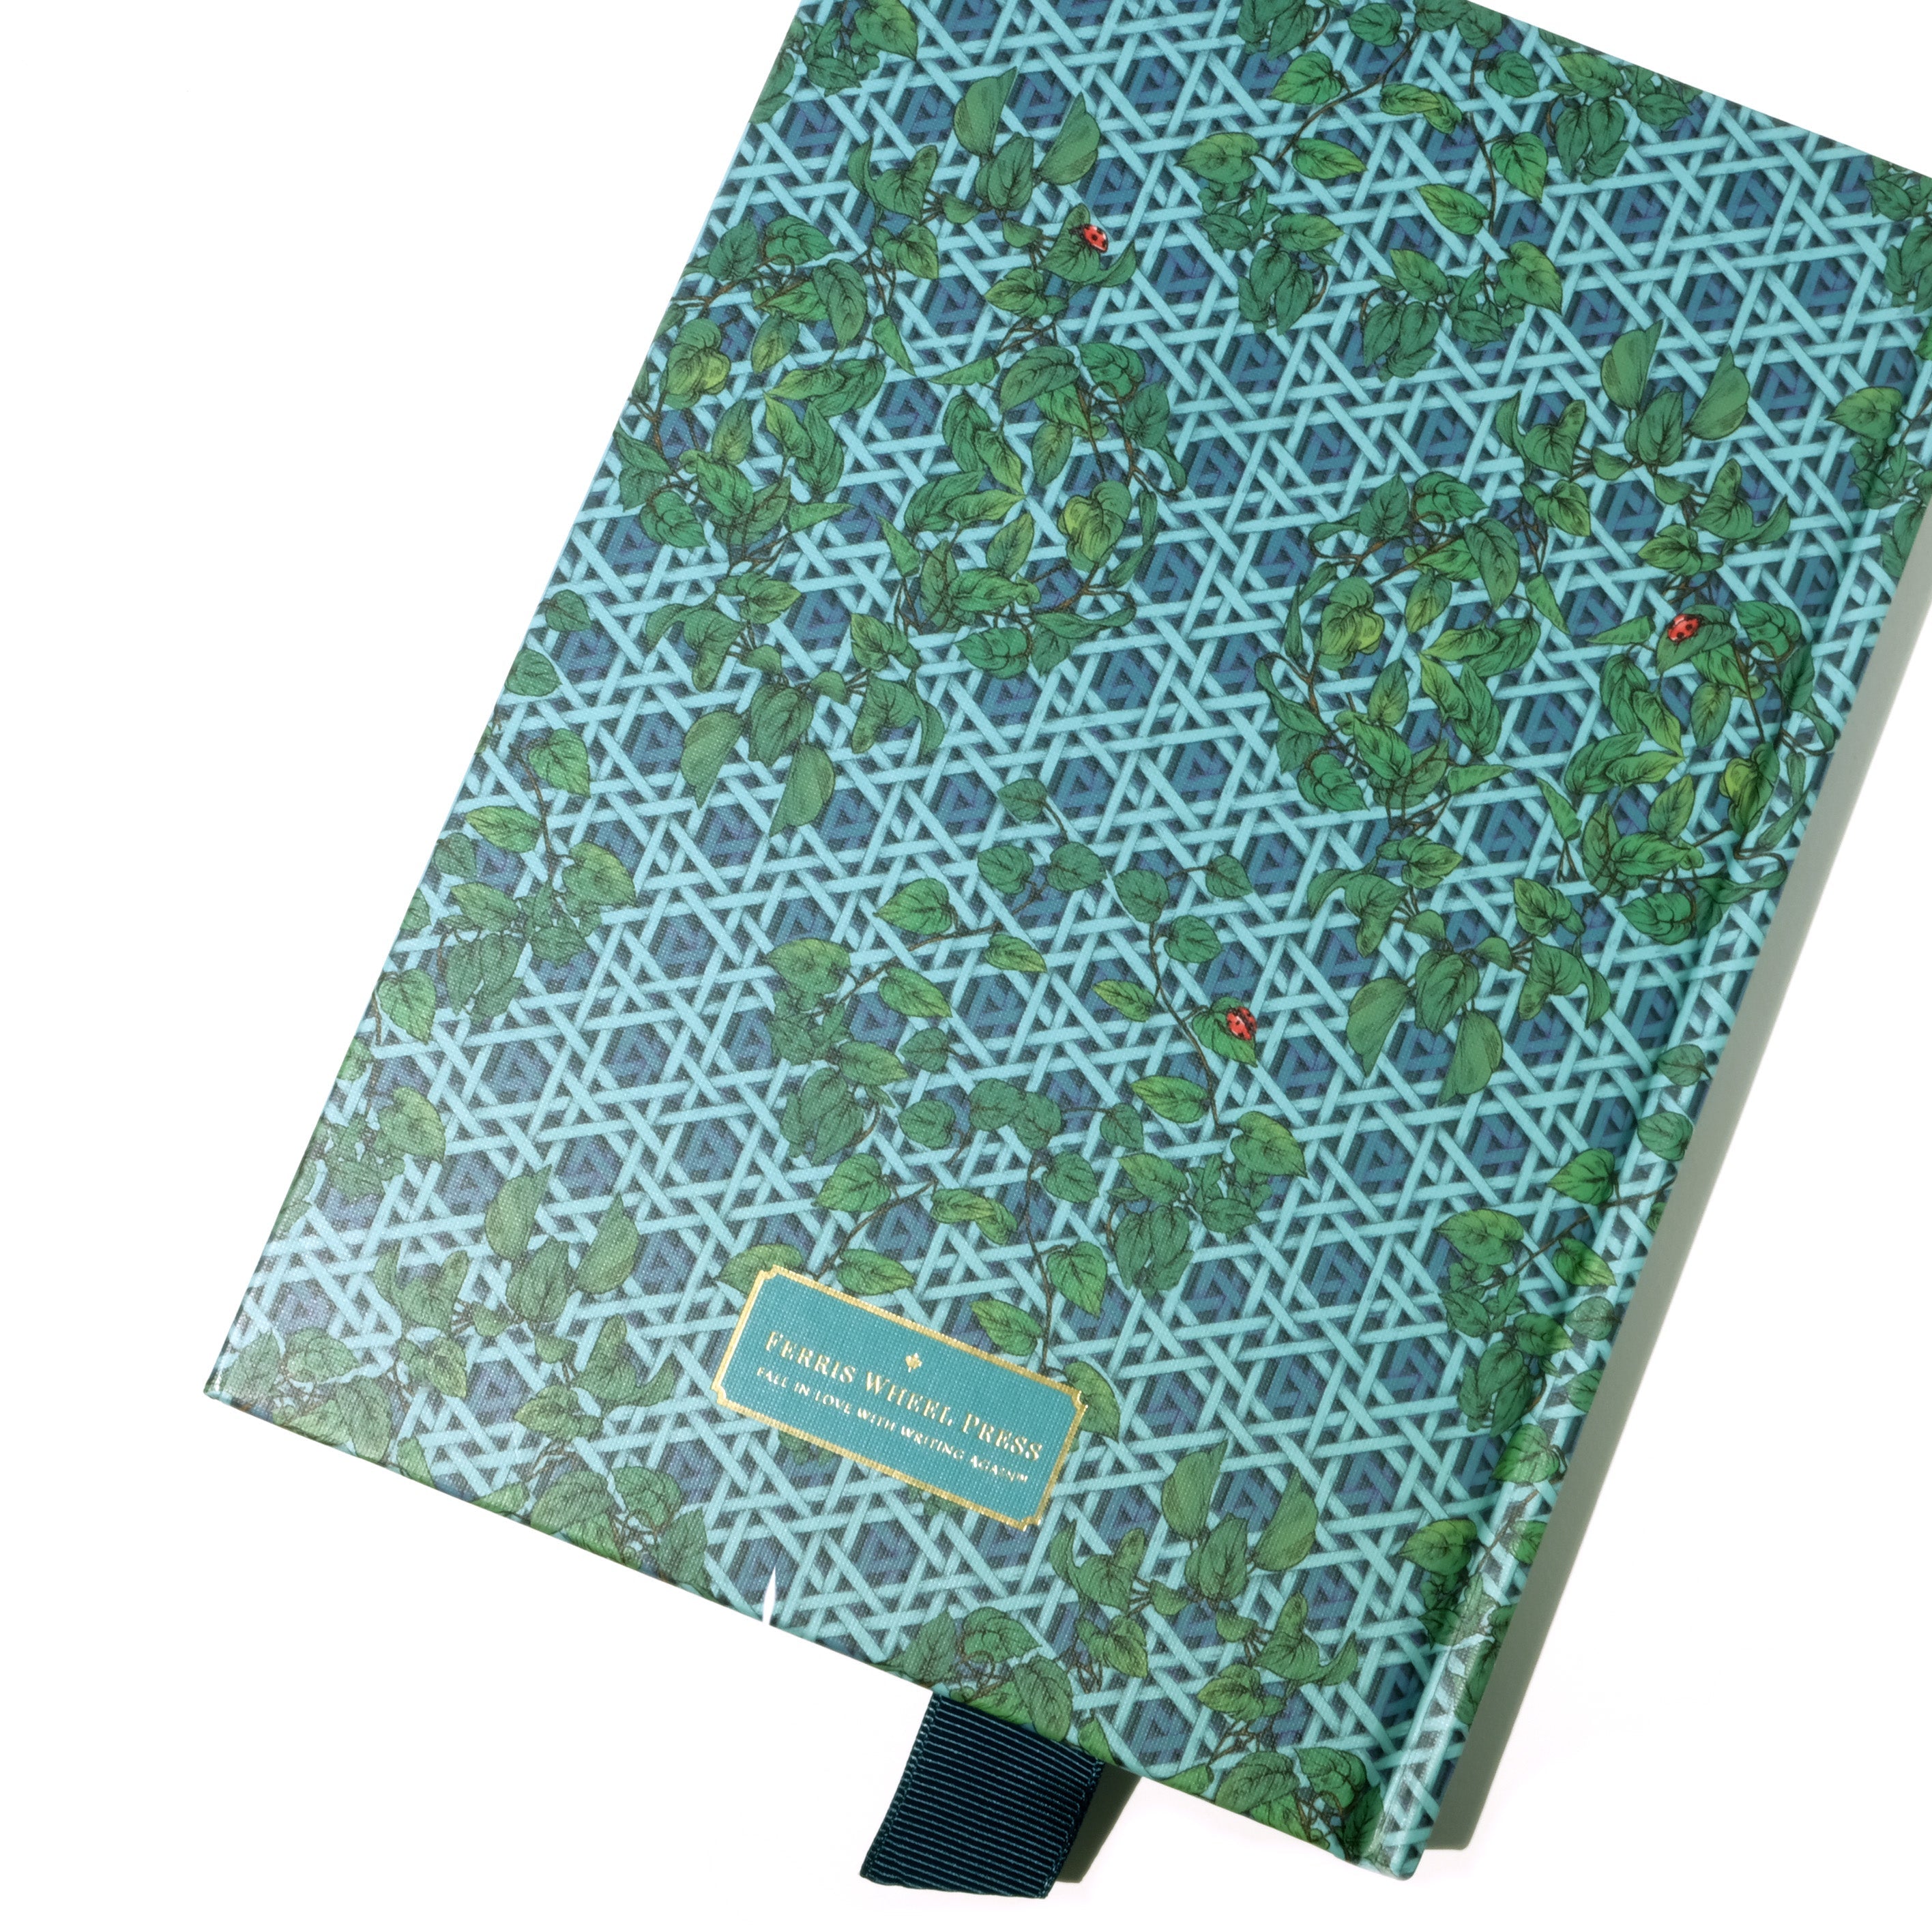 The Sketchbook A5: Enveloped in Rattan - Teal